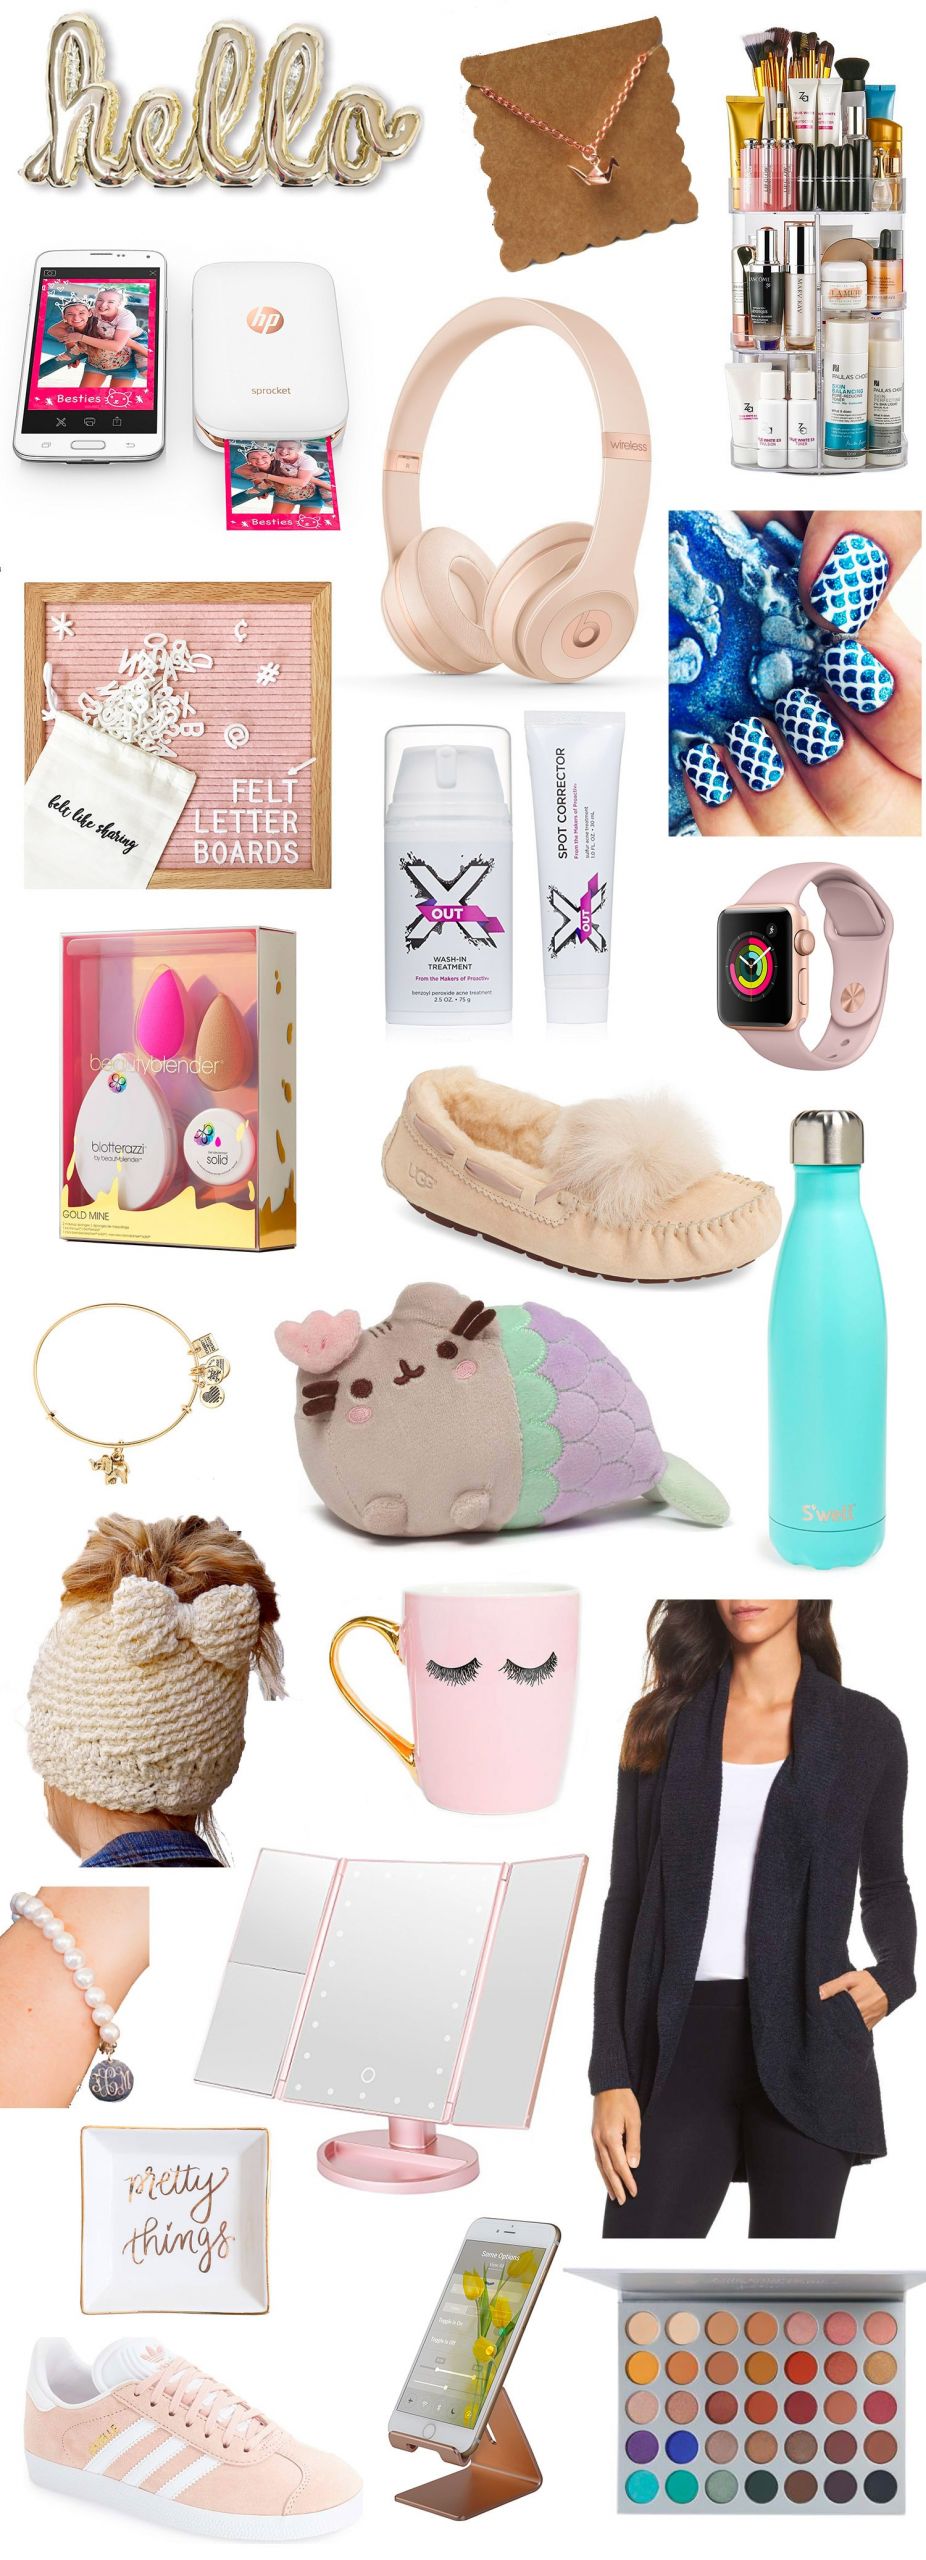 Girl Christmas Gift Ideas
 Top Gifts for Teens This Christmas